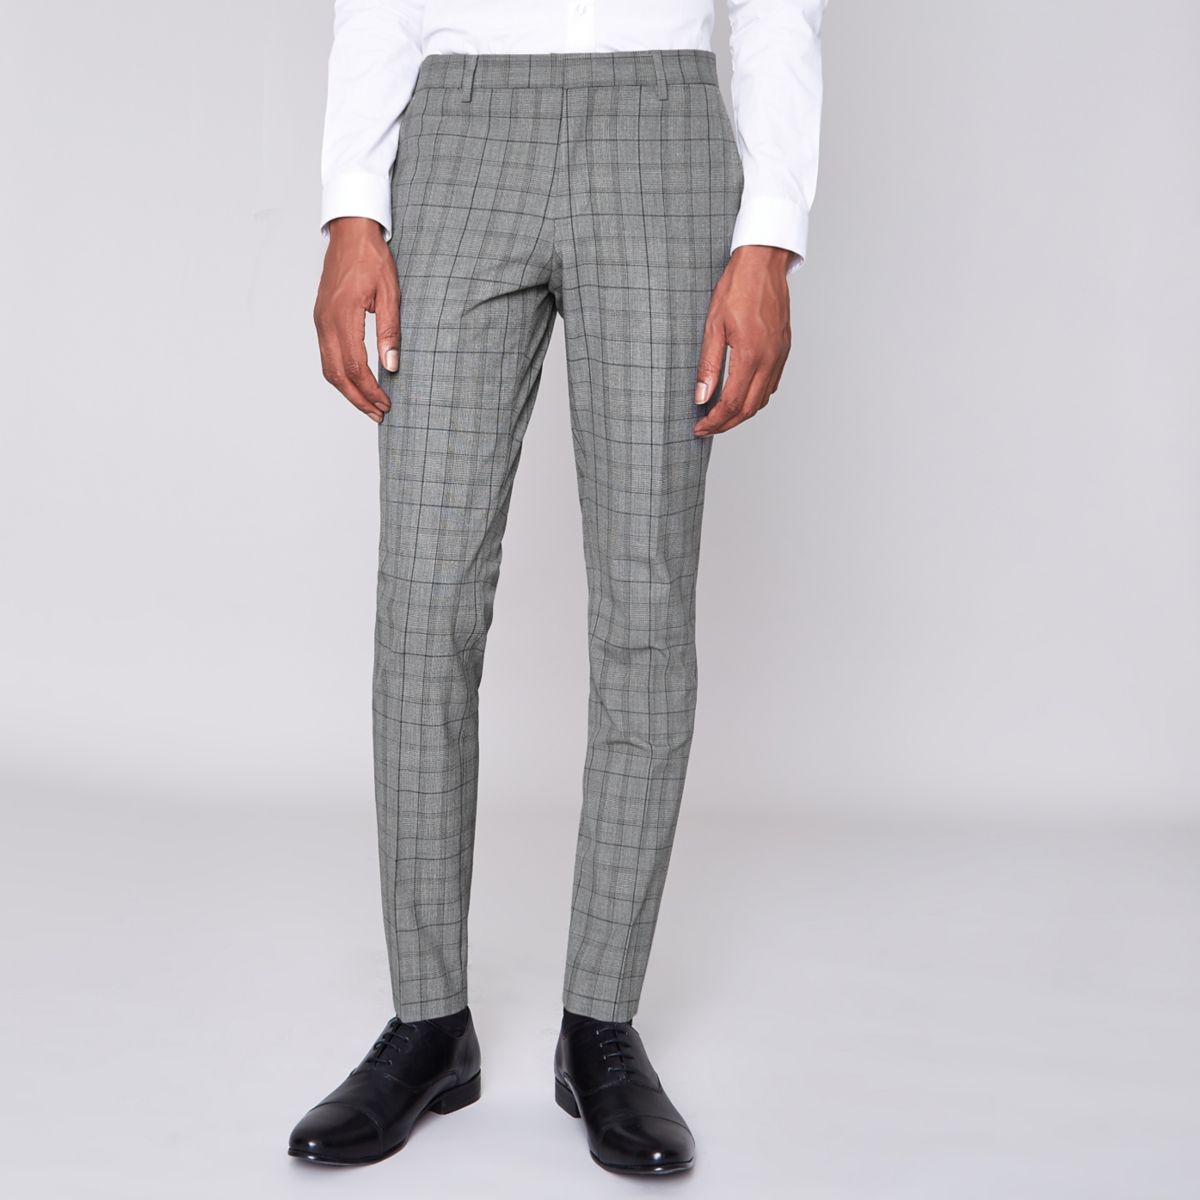 Grey check super skinny fit suit trousers - Suit Trousers - Suits - men